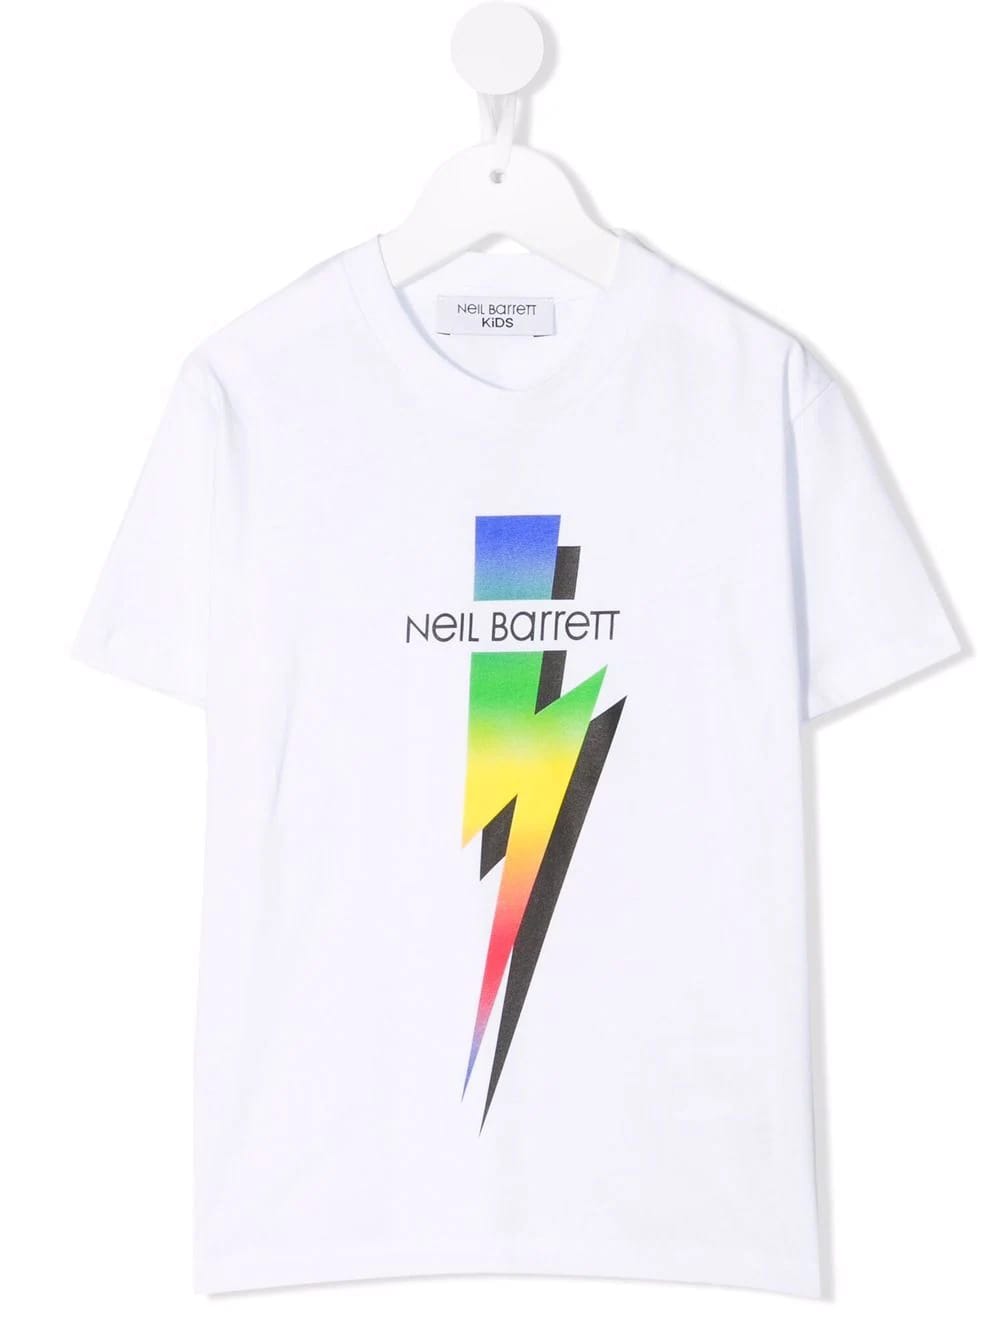 Neil Barrett Kids White T-shirt With Logo And Multicolored Thunderbolt Print